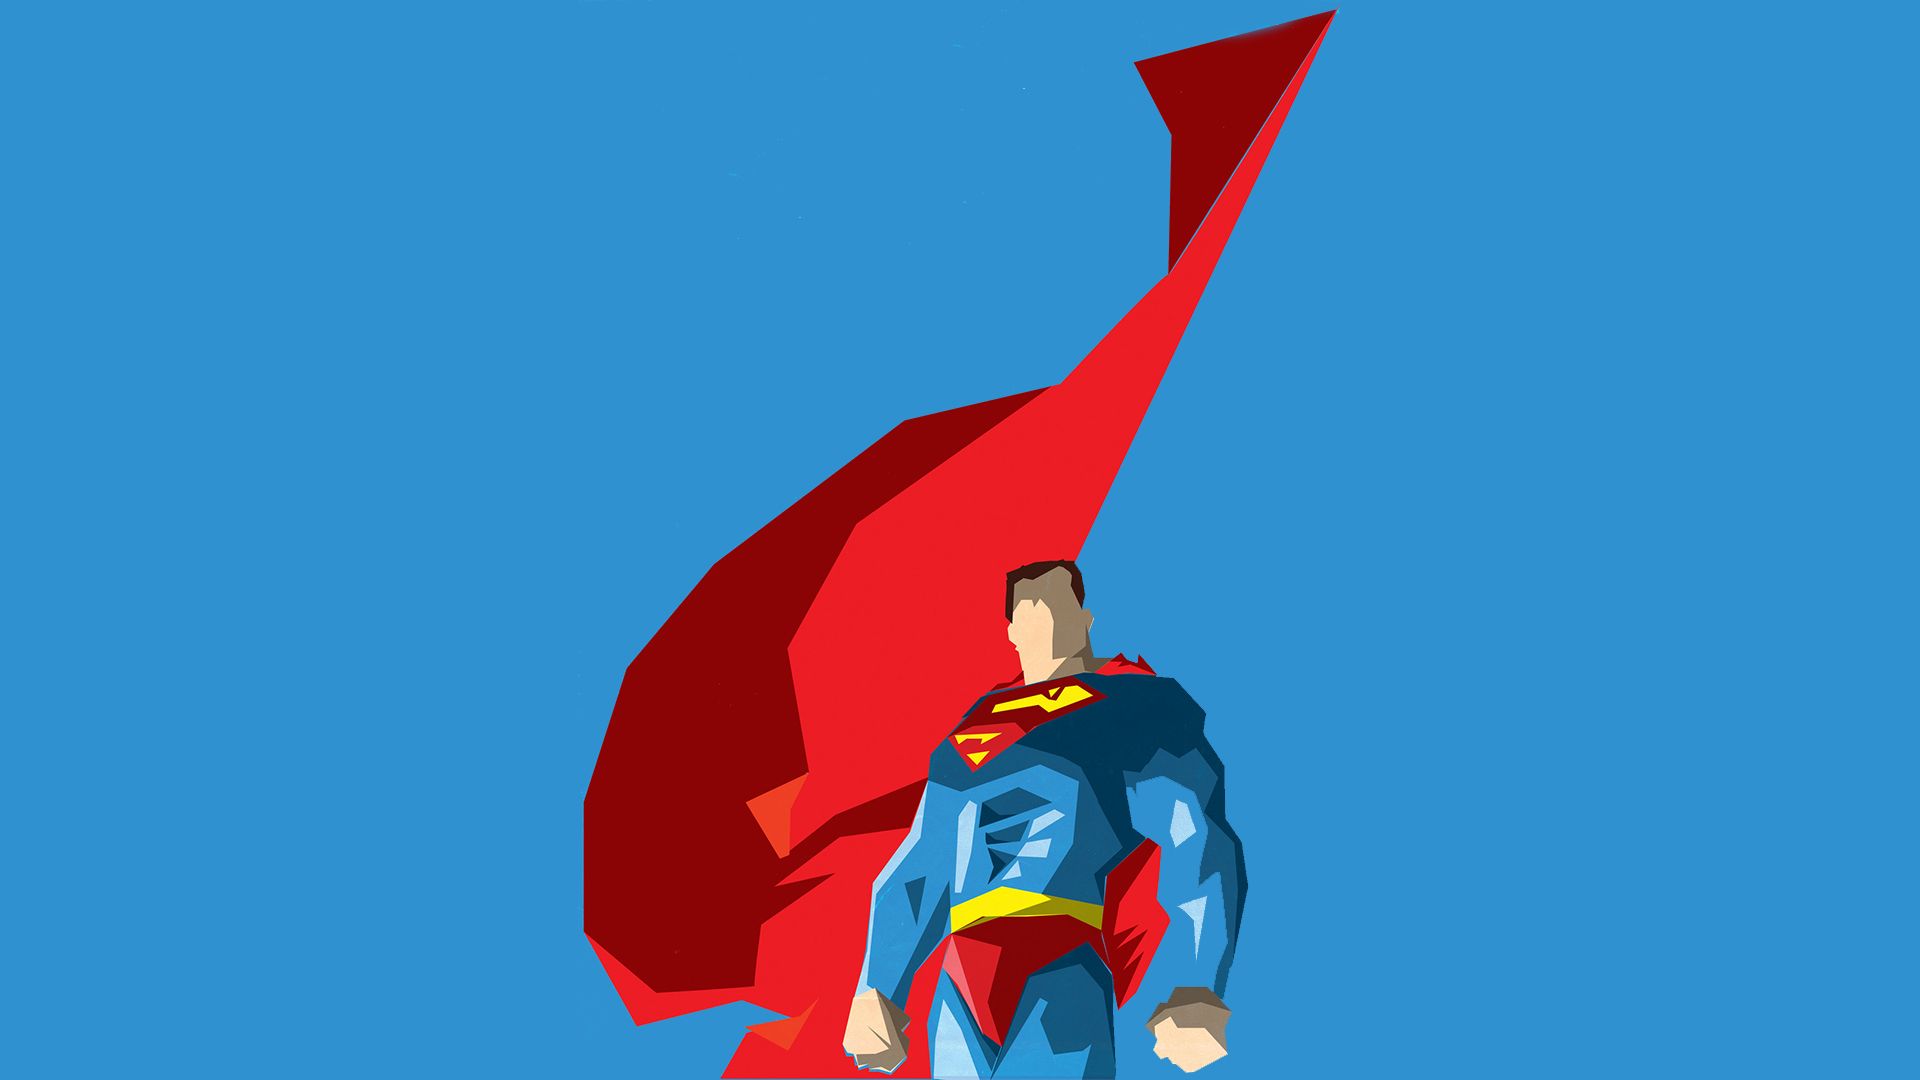 Superman Flying Cape Artwork, HD Superheroes, 4k Wallpaper